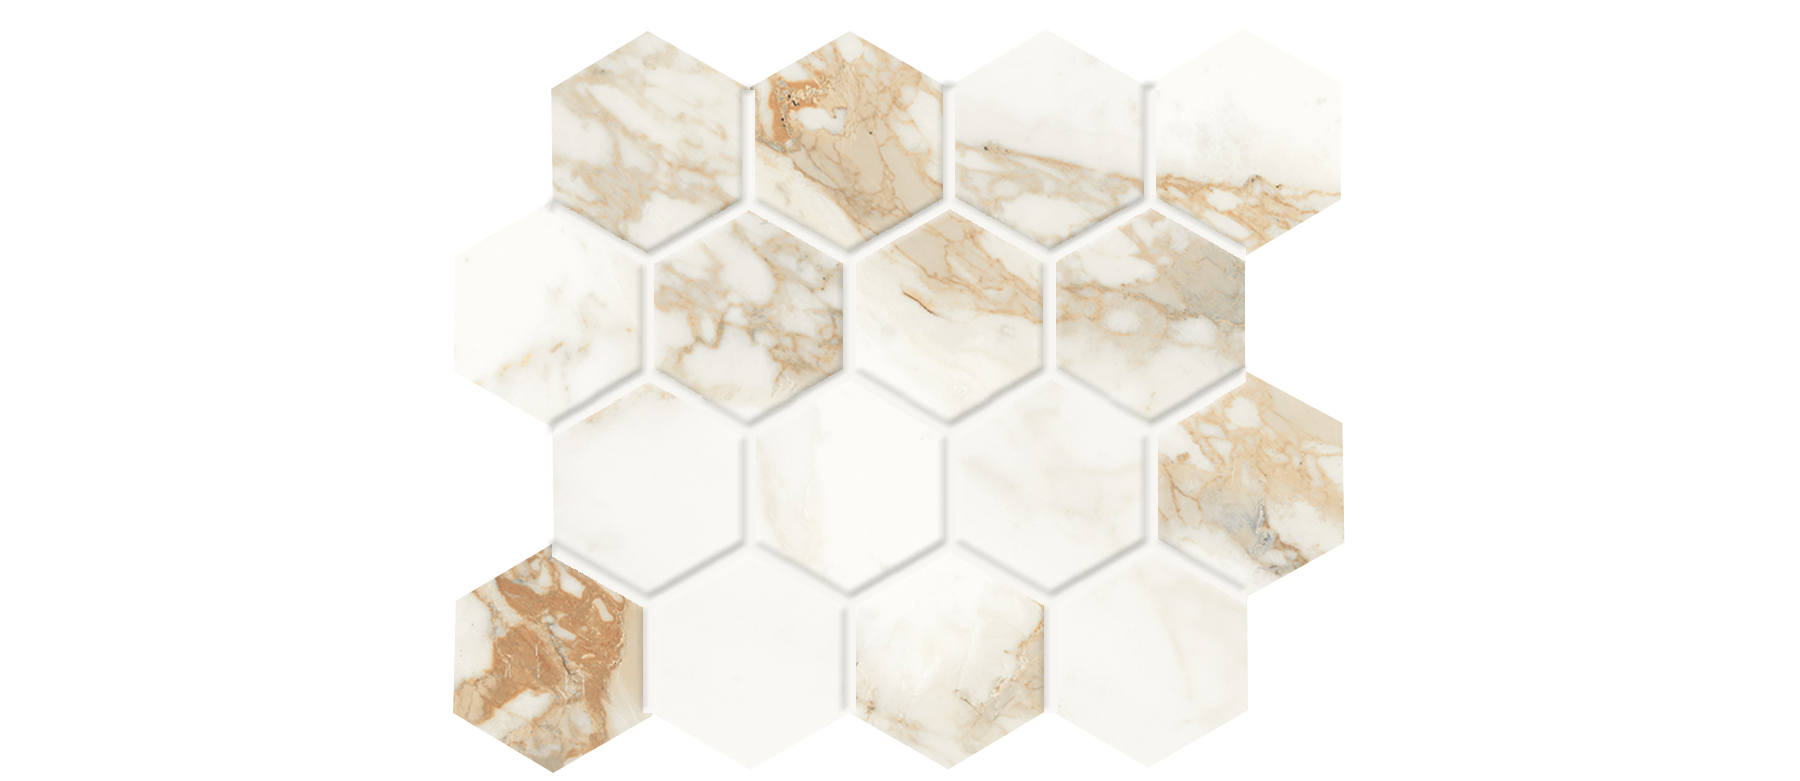 Favolosa 3x3 Hexagonal Mosaic- Calacatta Gold Glazed Porcelain